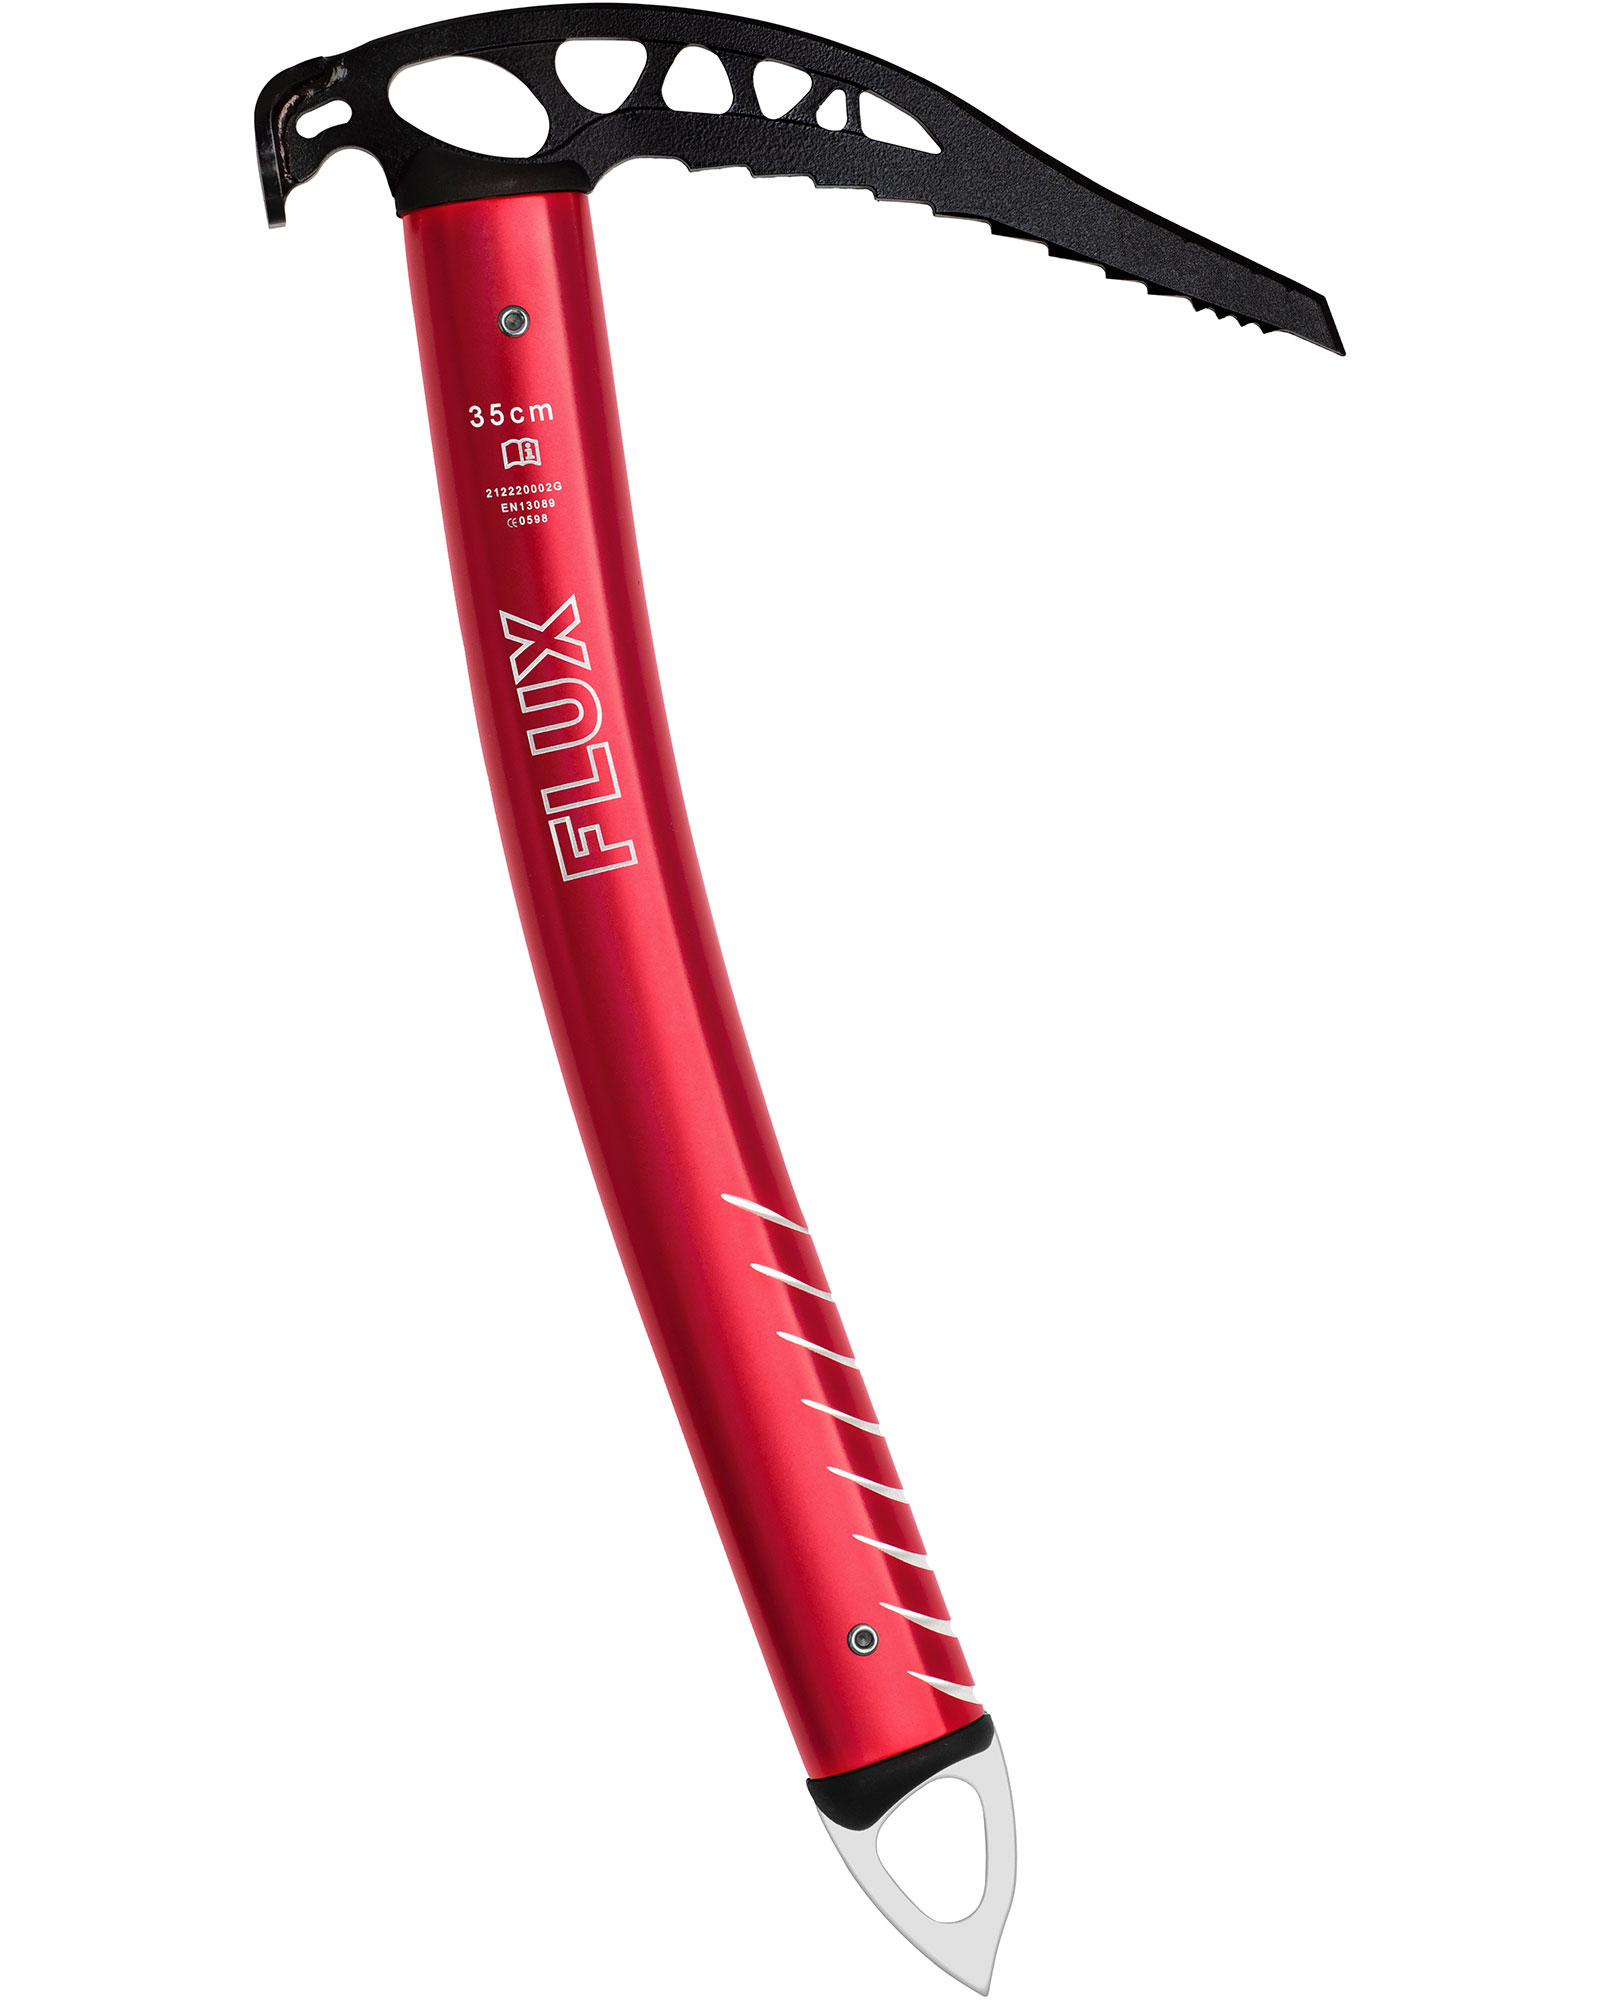 DMM Flux Hammer Ice Axe - Red 35cm